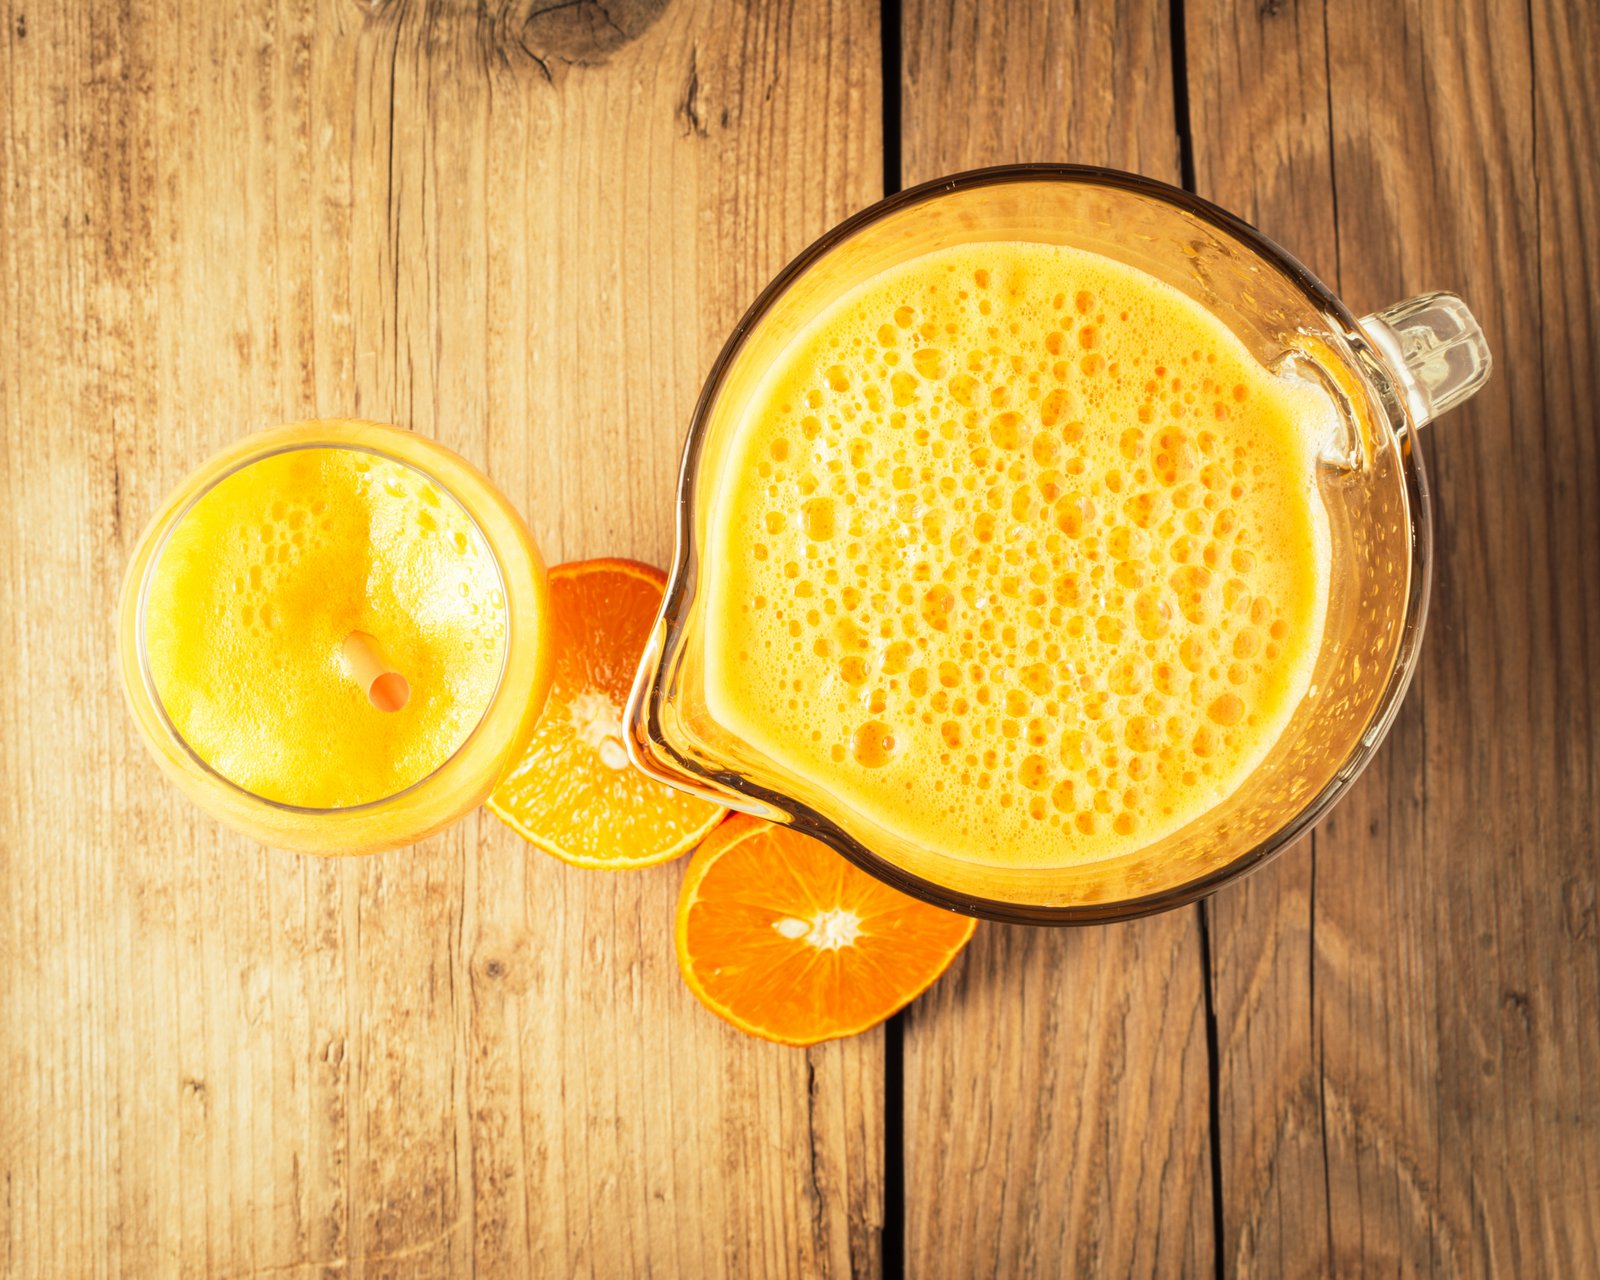 Homemade orange Juice Recipe 